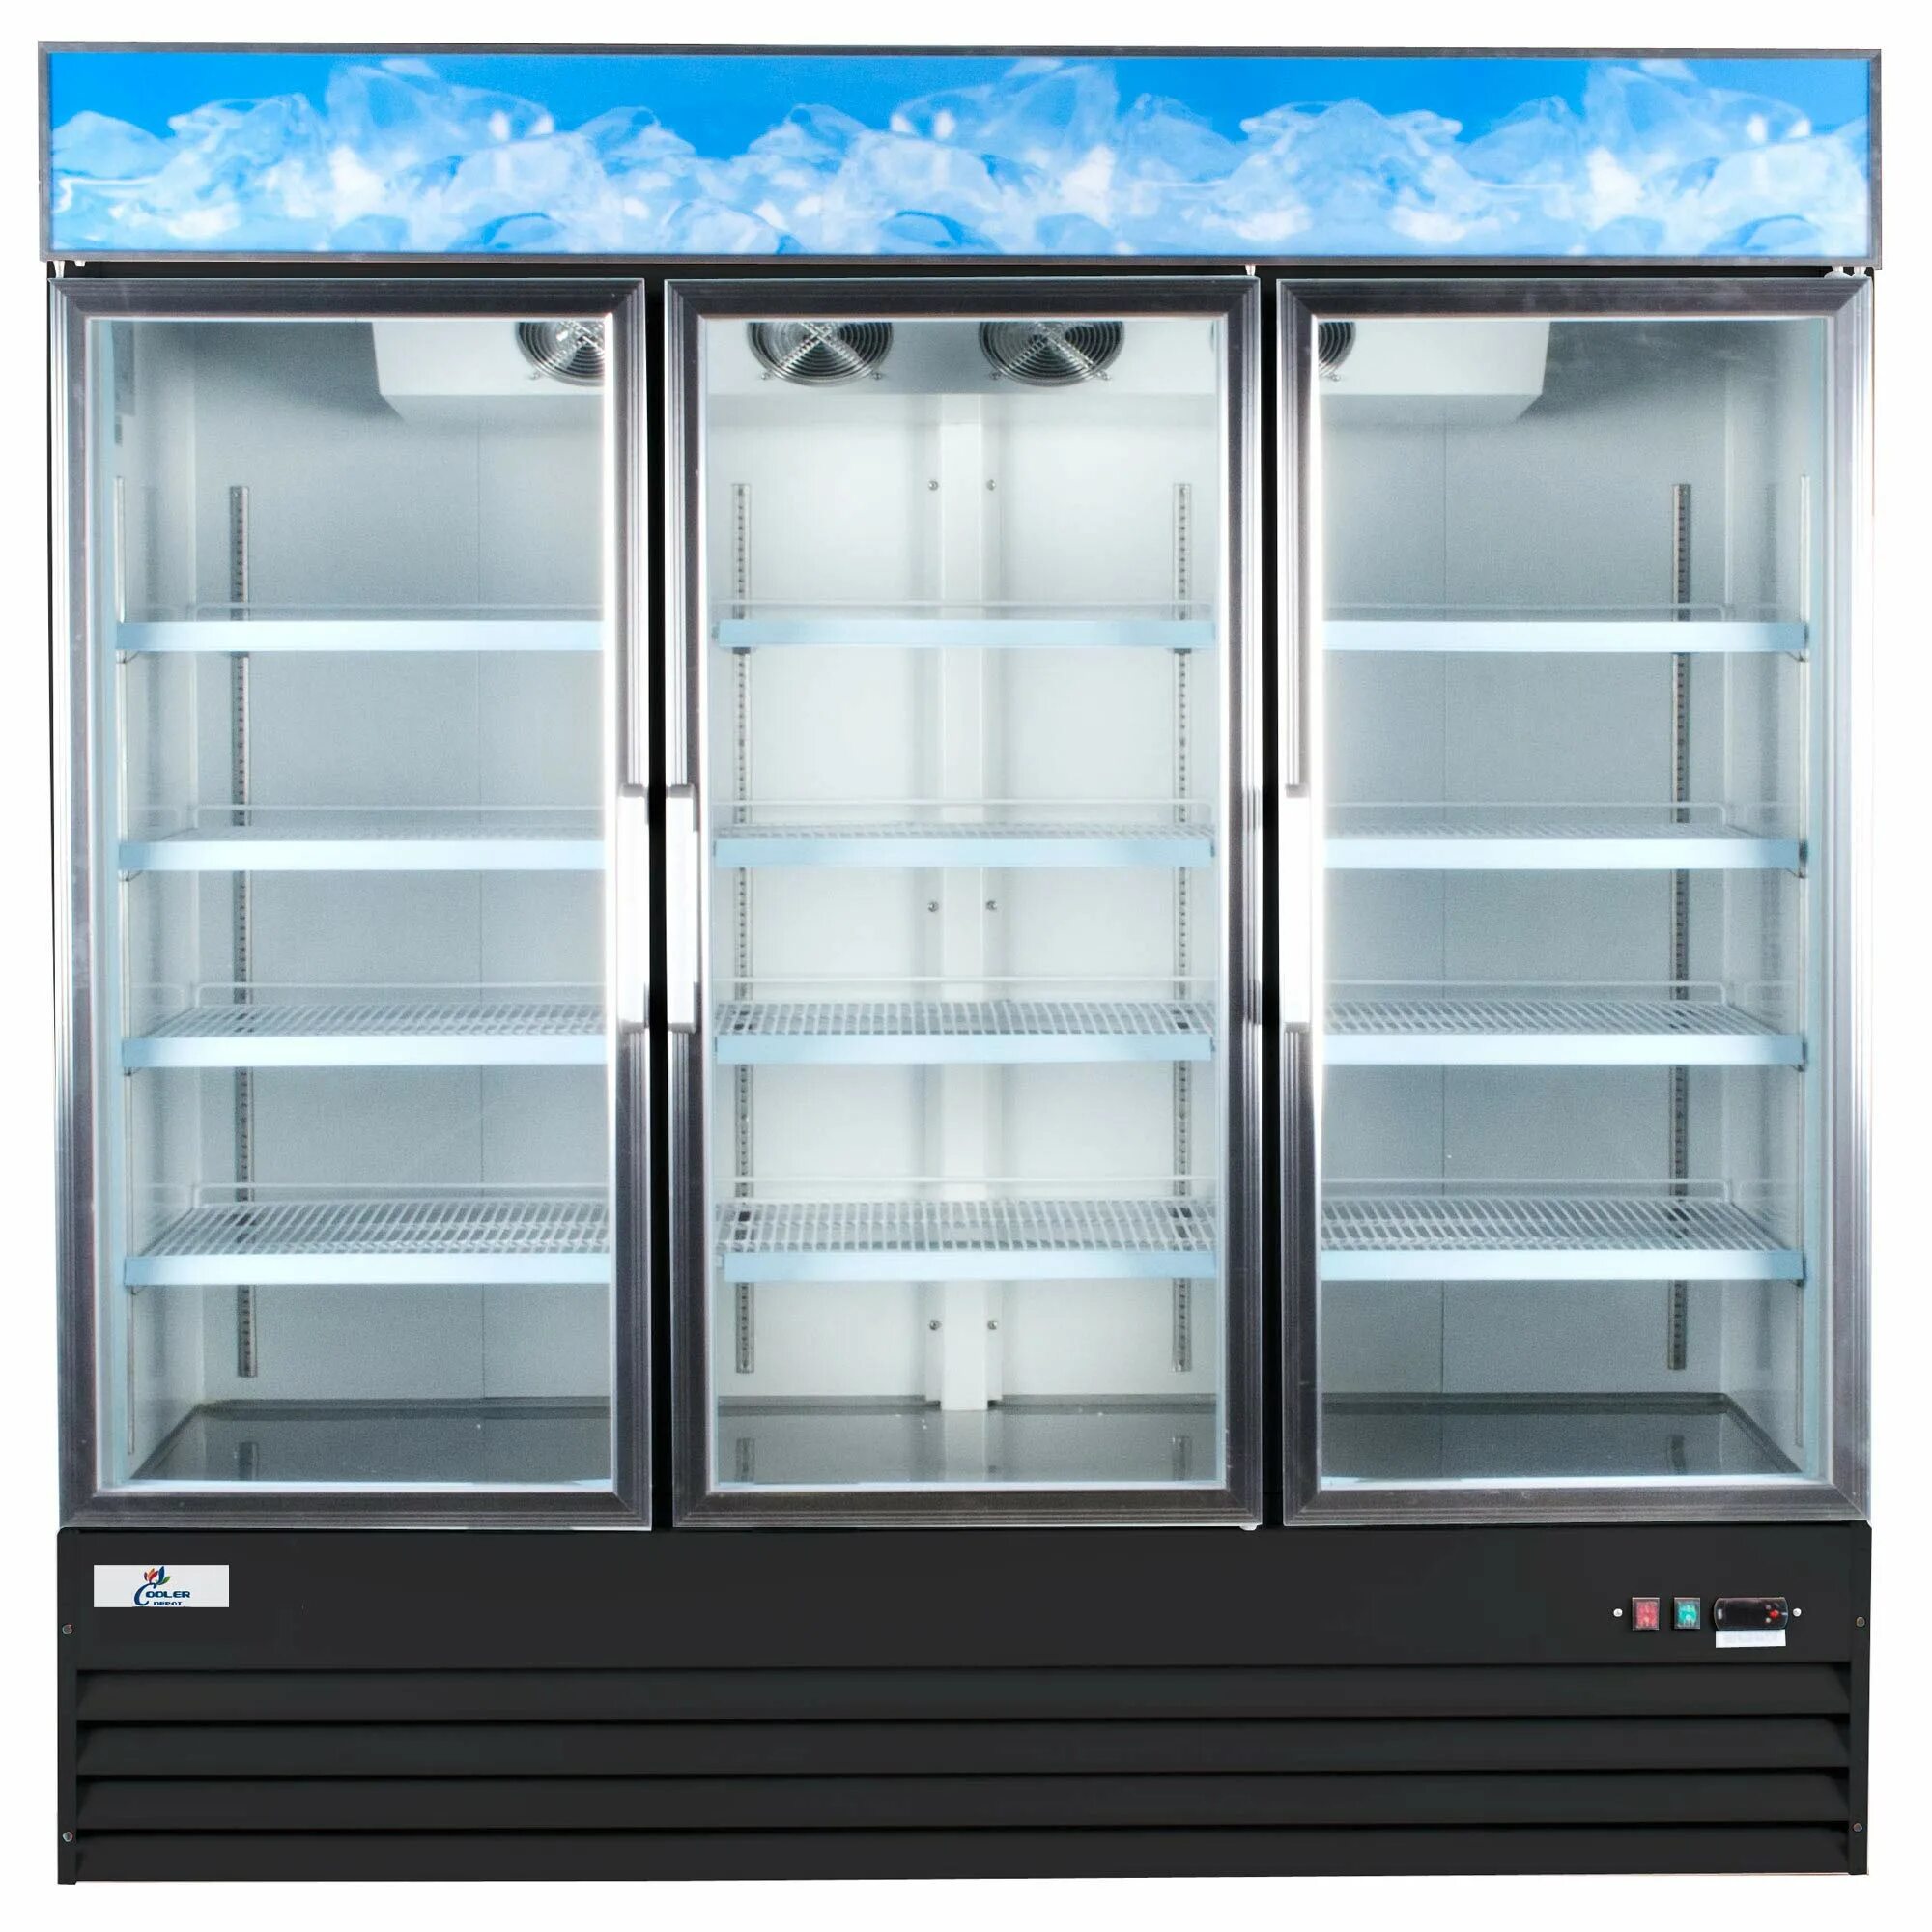 Холодильник шкаф витрина. Холодильный шкаф Cold s700. Шкаф холодильный Carboma f700. Холодильный шкаф Carboma r560 (приложение 3.2.). Шкаф холодильный dm110sd-s.